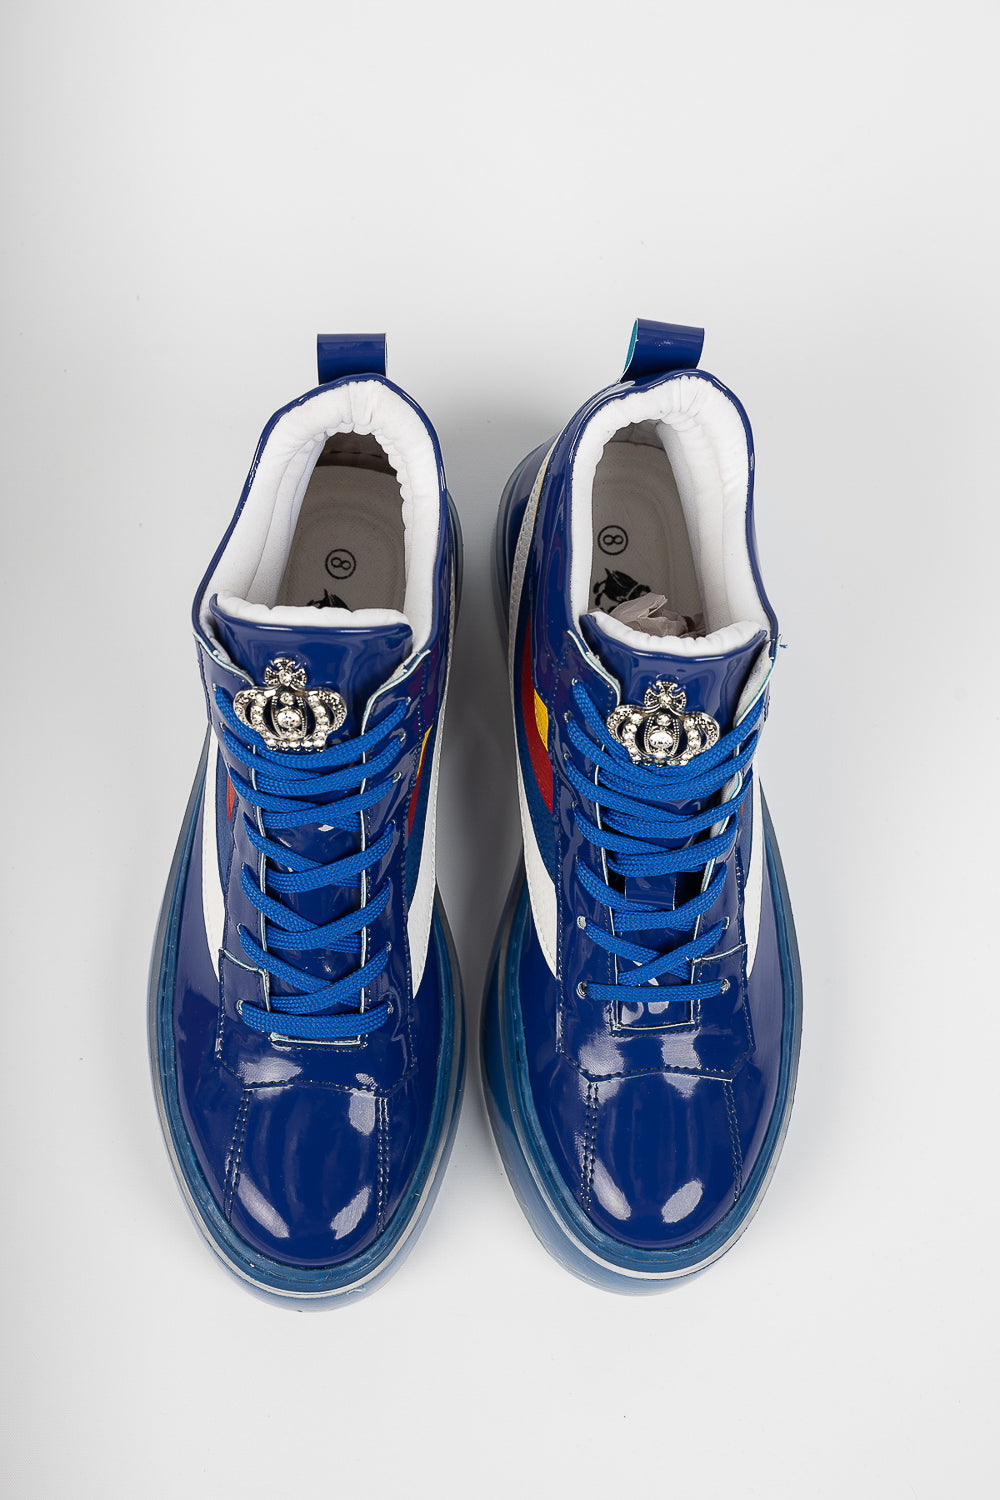 Majesty Dark Blue - Swagg Splash Sneakers